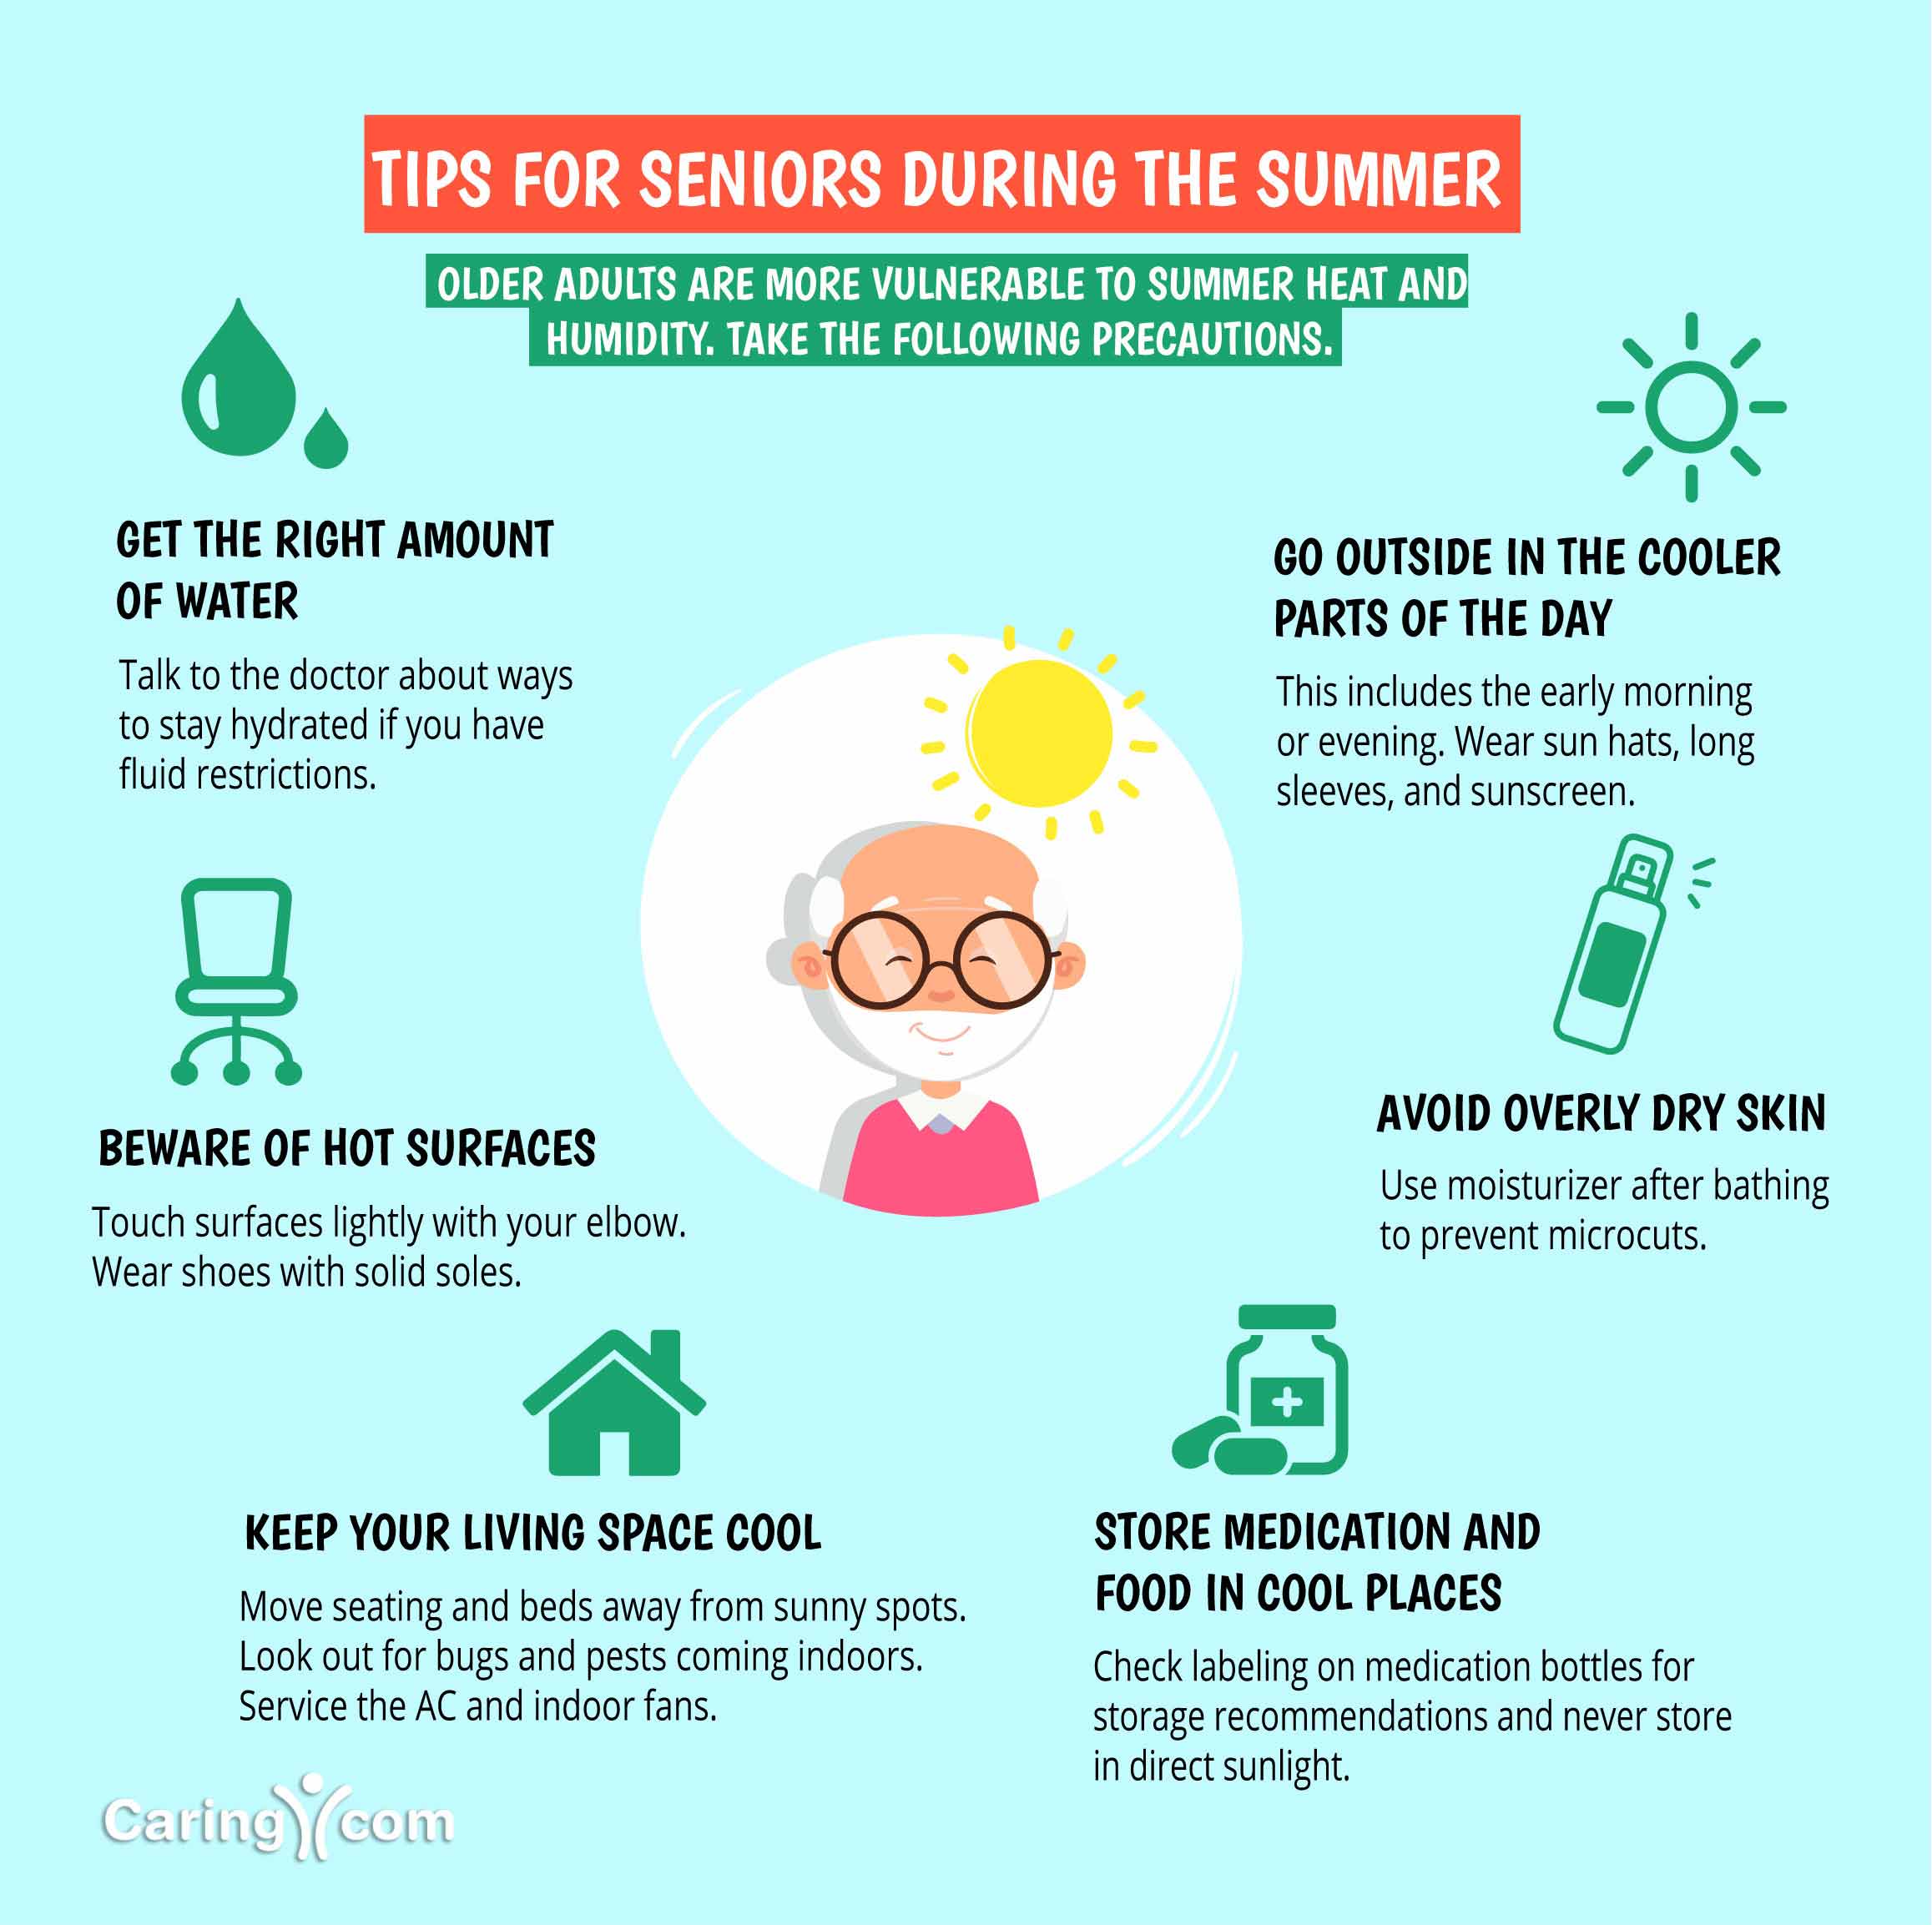 Tips for Seniors During the Summer